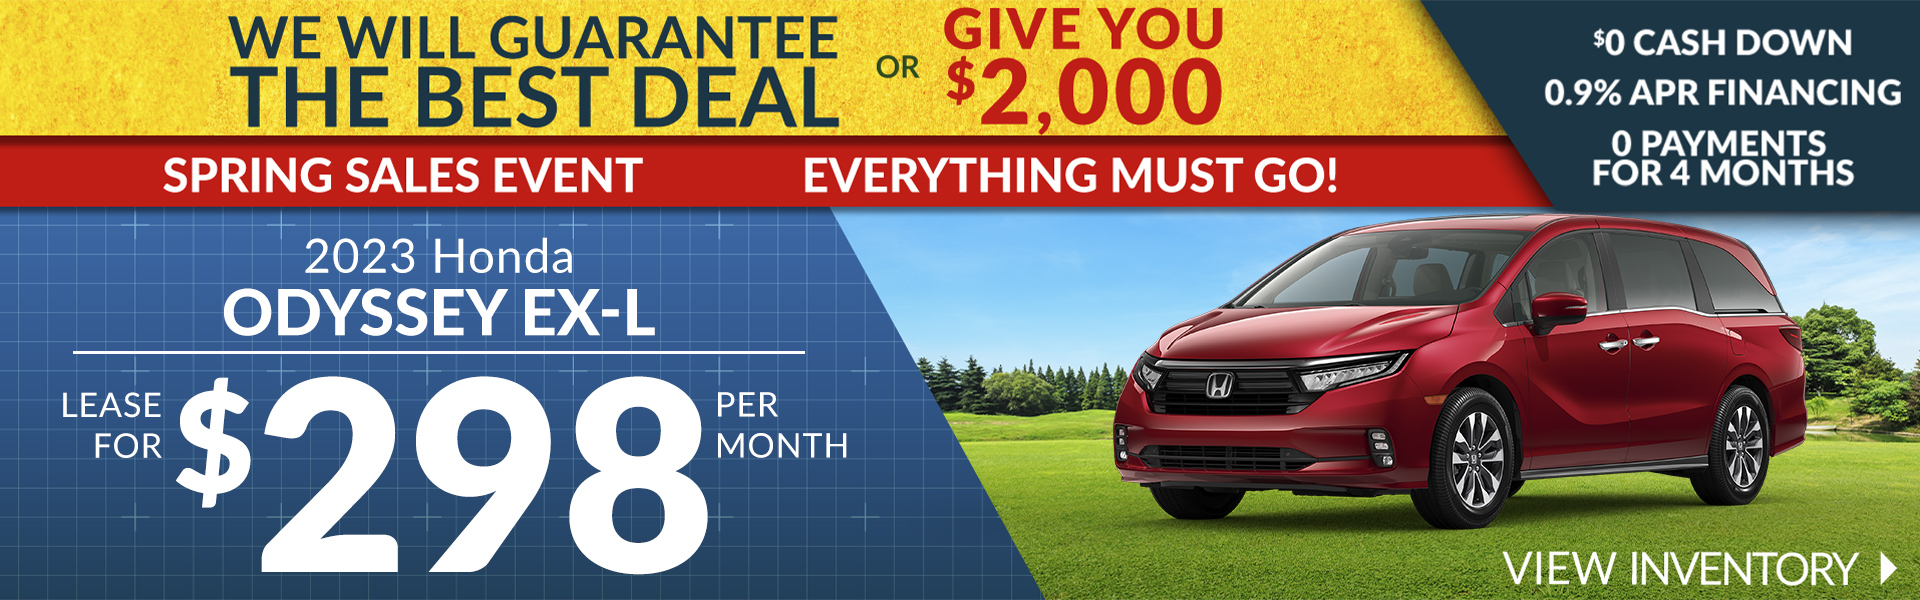 Honda Odyssey Offer